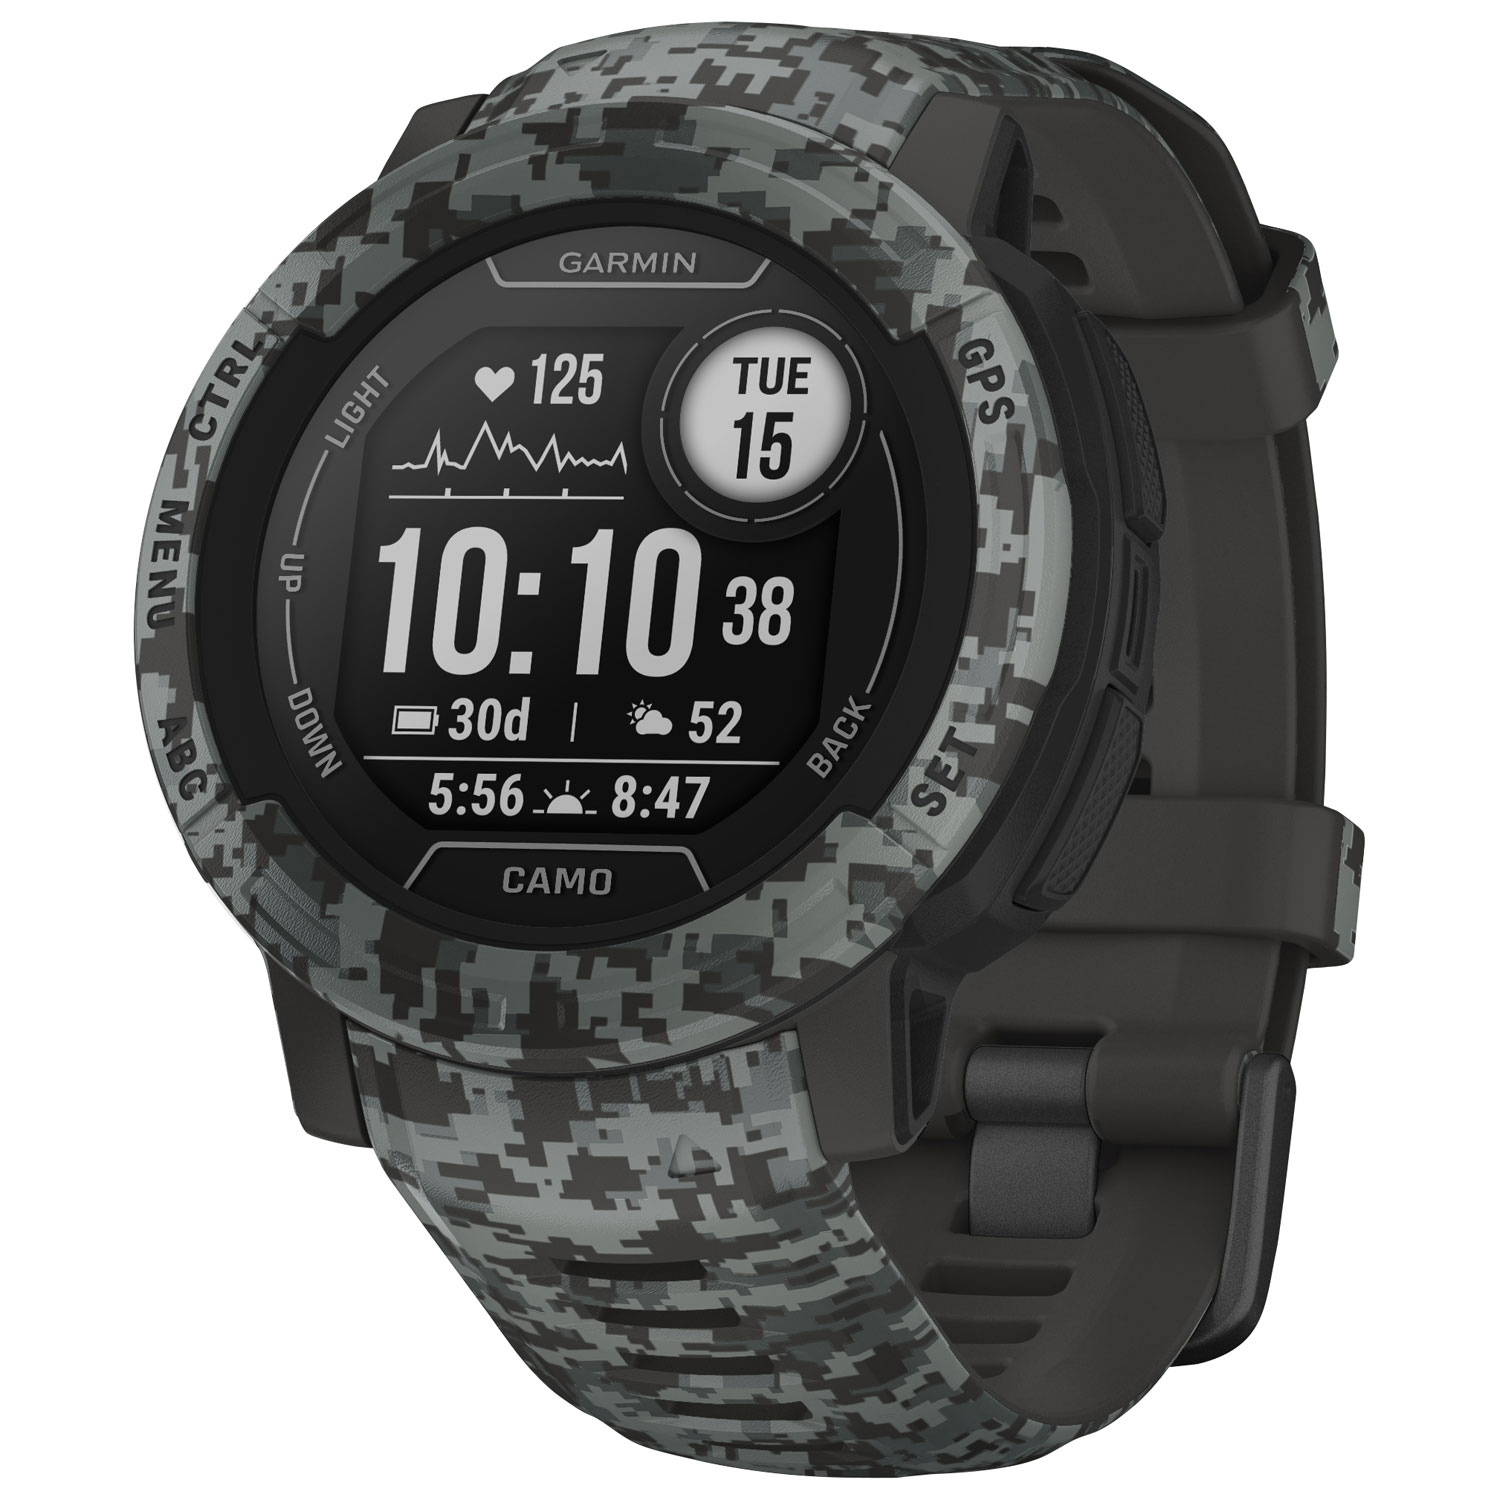 Garmin Instinct 2 Camo Edition 45mm GPS Watch with Heart Rate Monitor - Graphite Camo